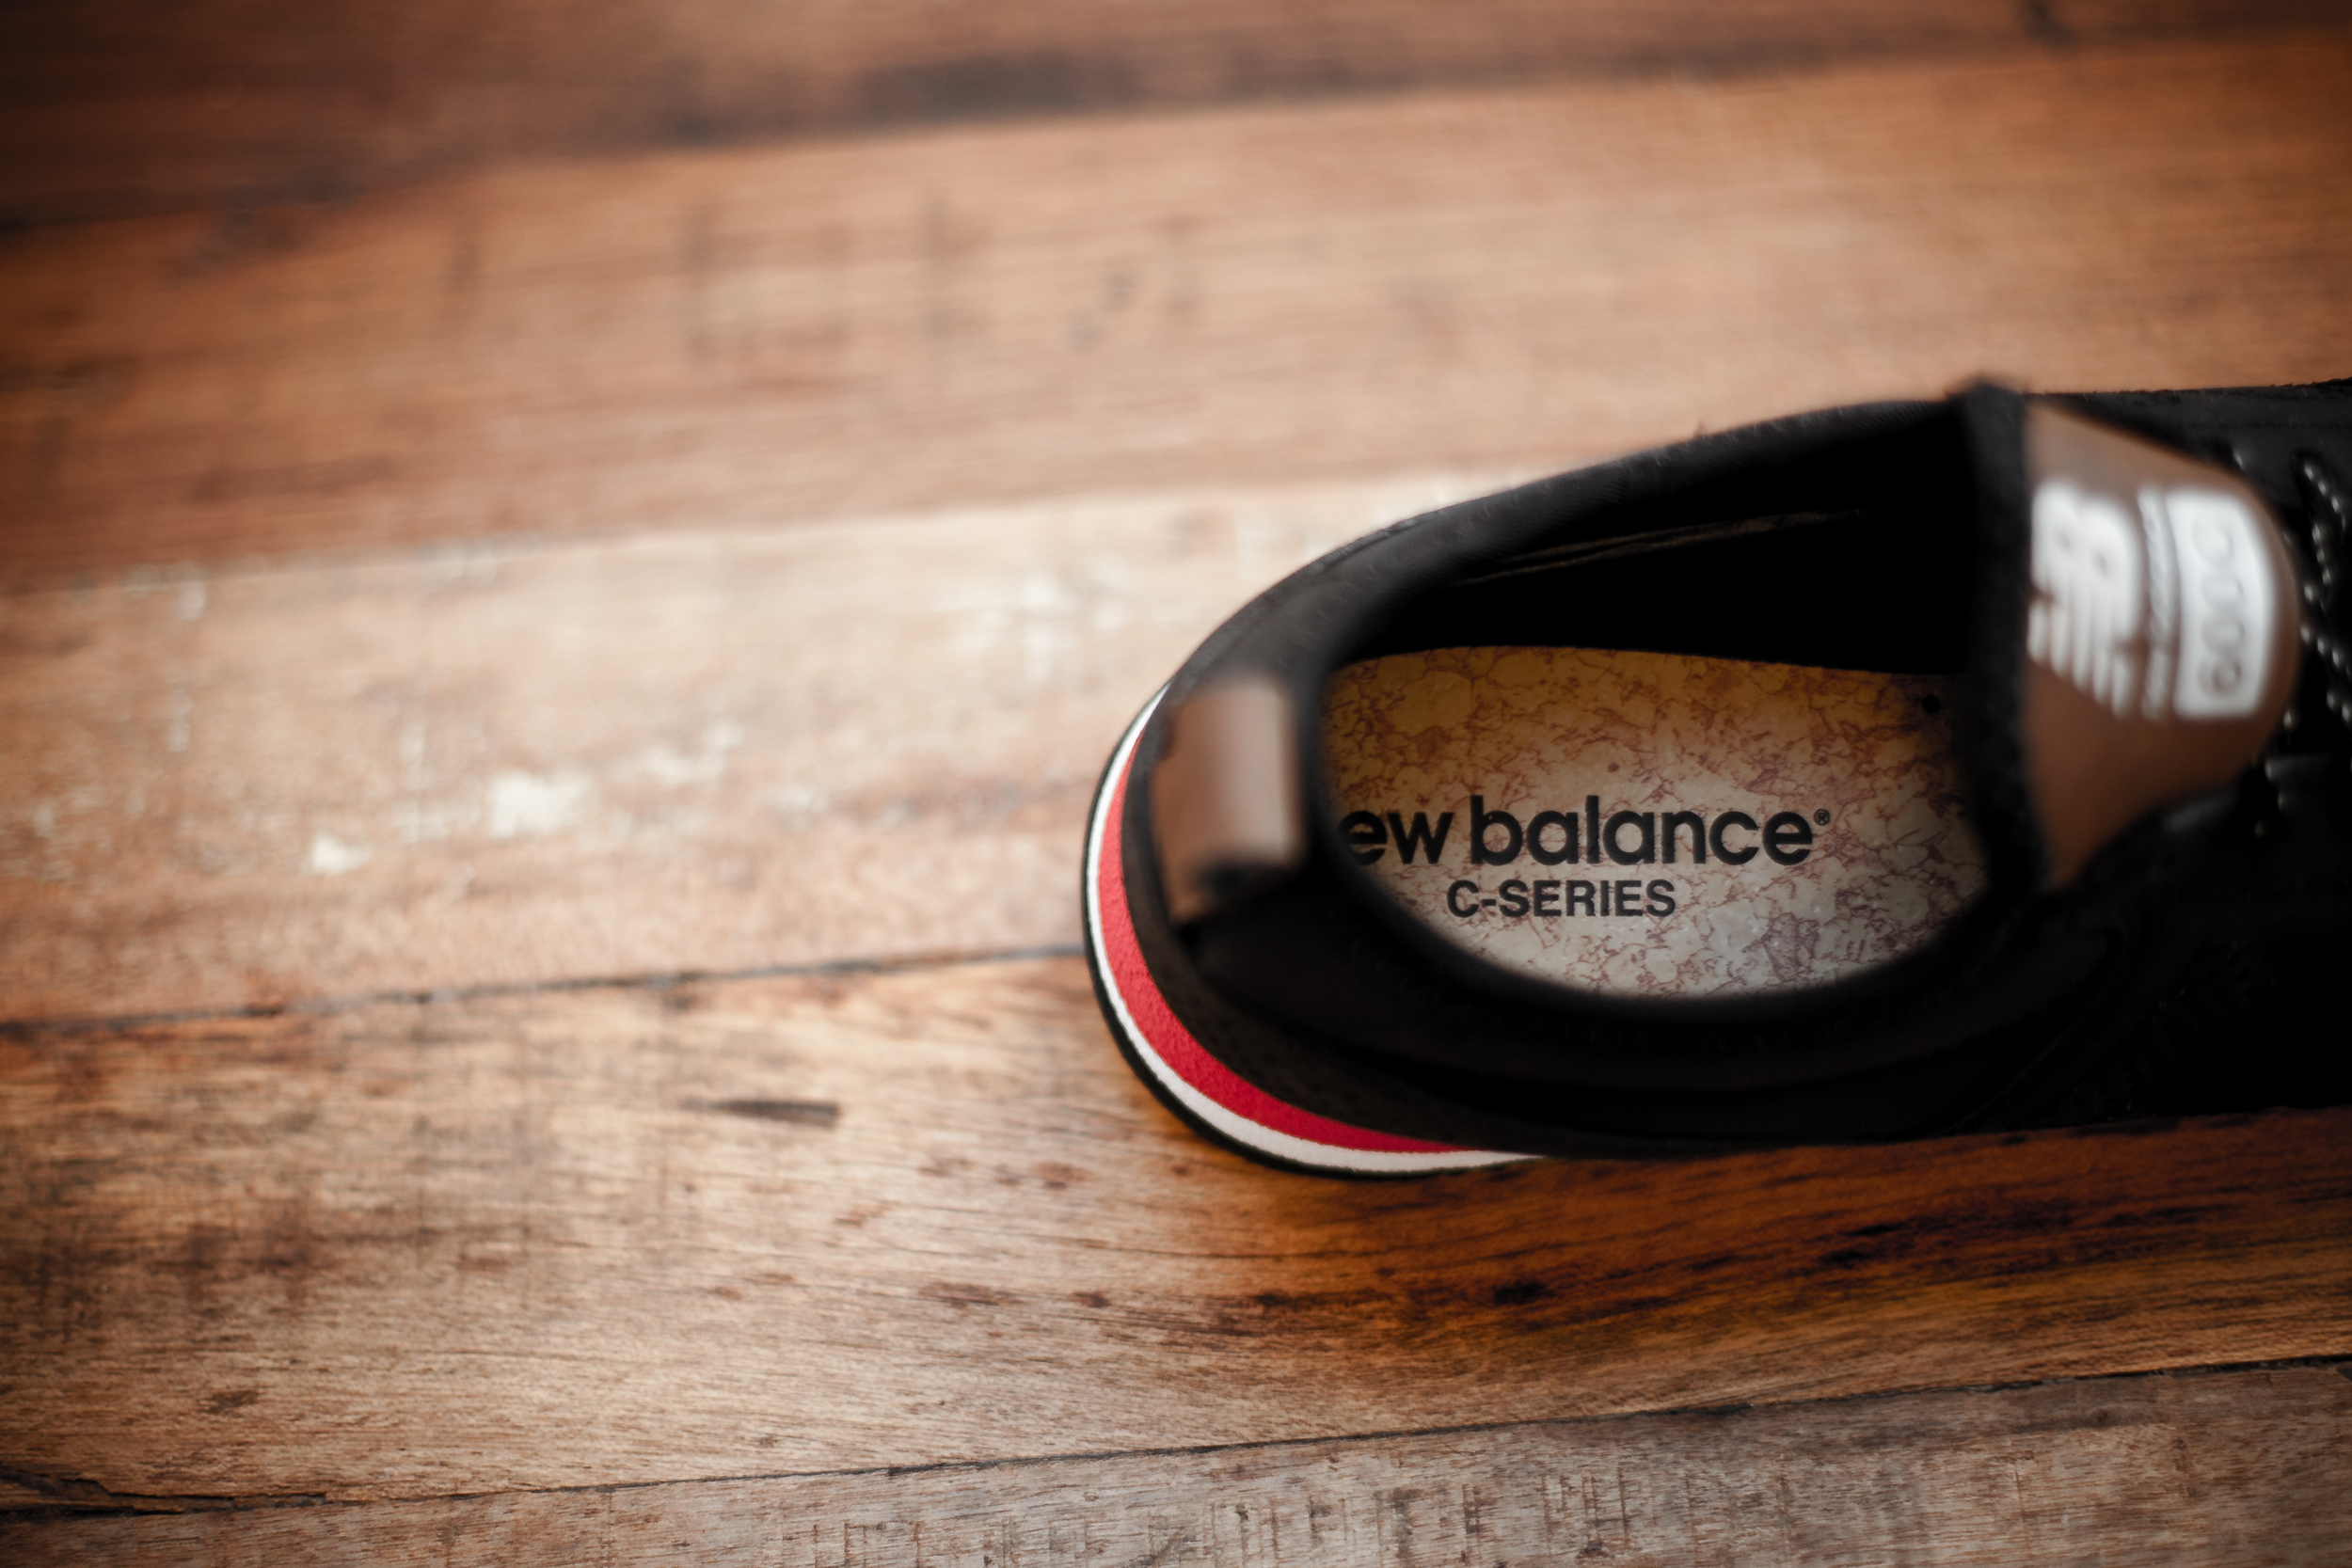 New Balance CT600 C-Series cork insole